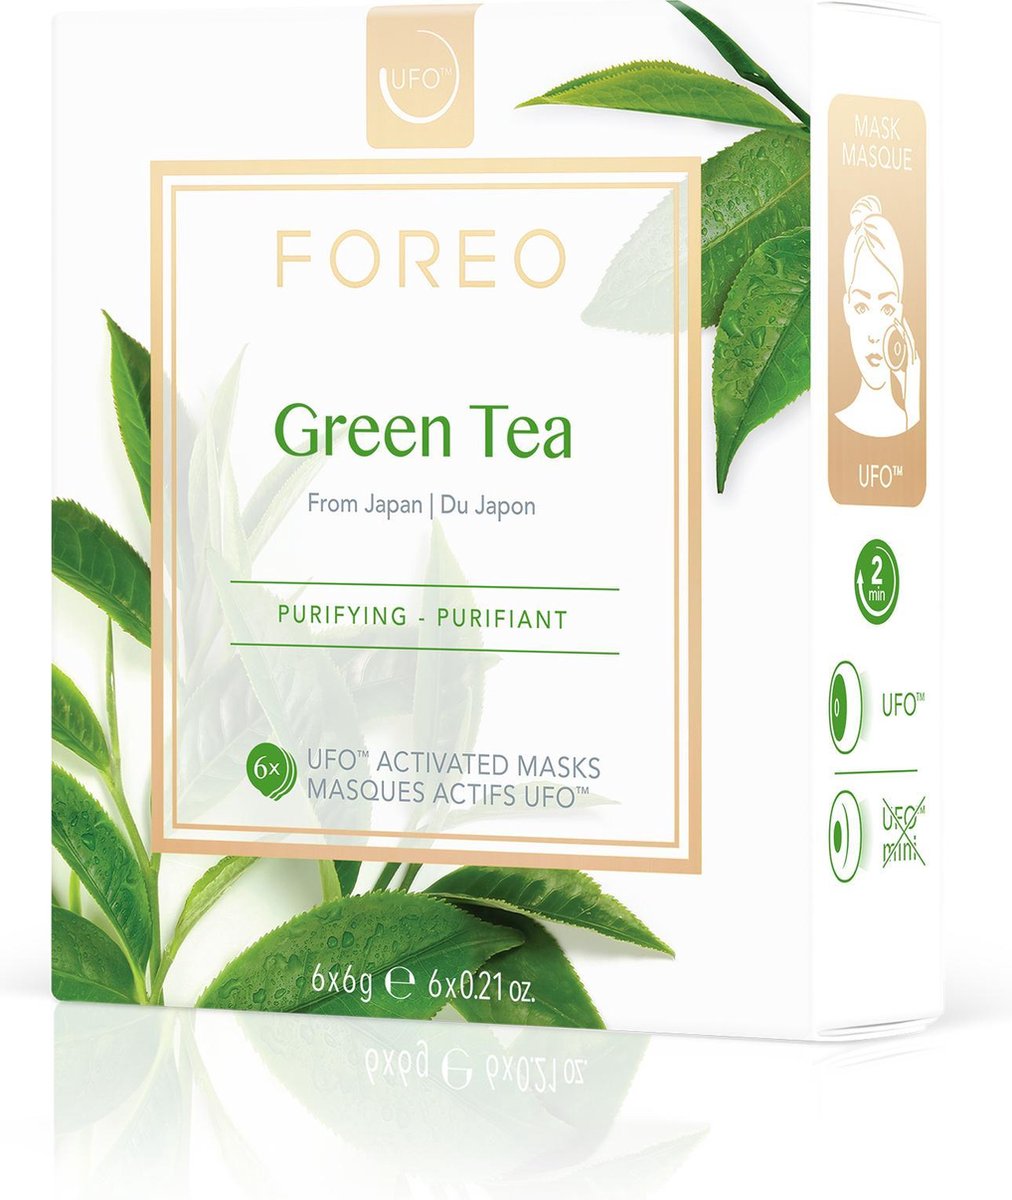 FOREO – Gezichtsmasker Green Tea voor UFO™ - FOREO